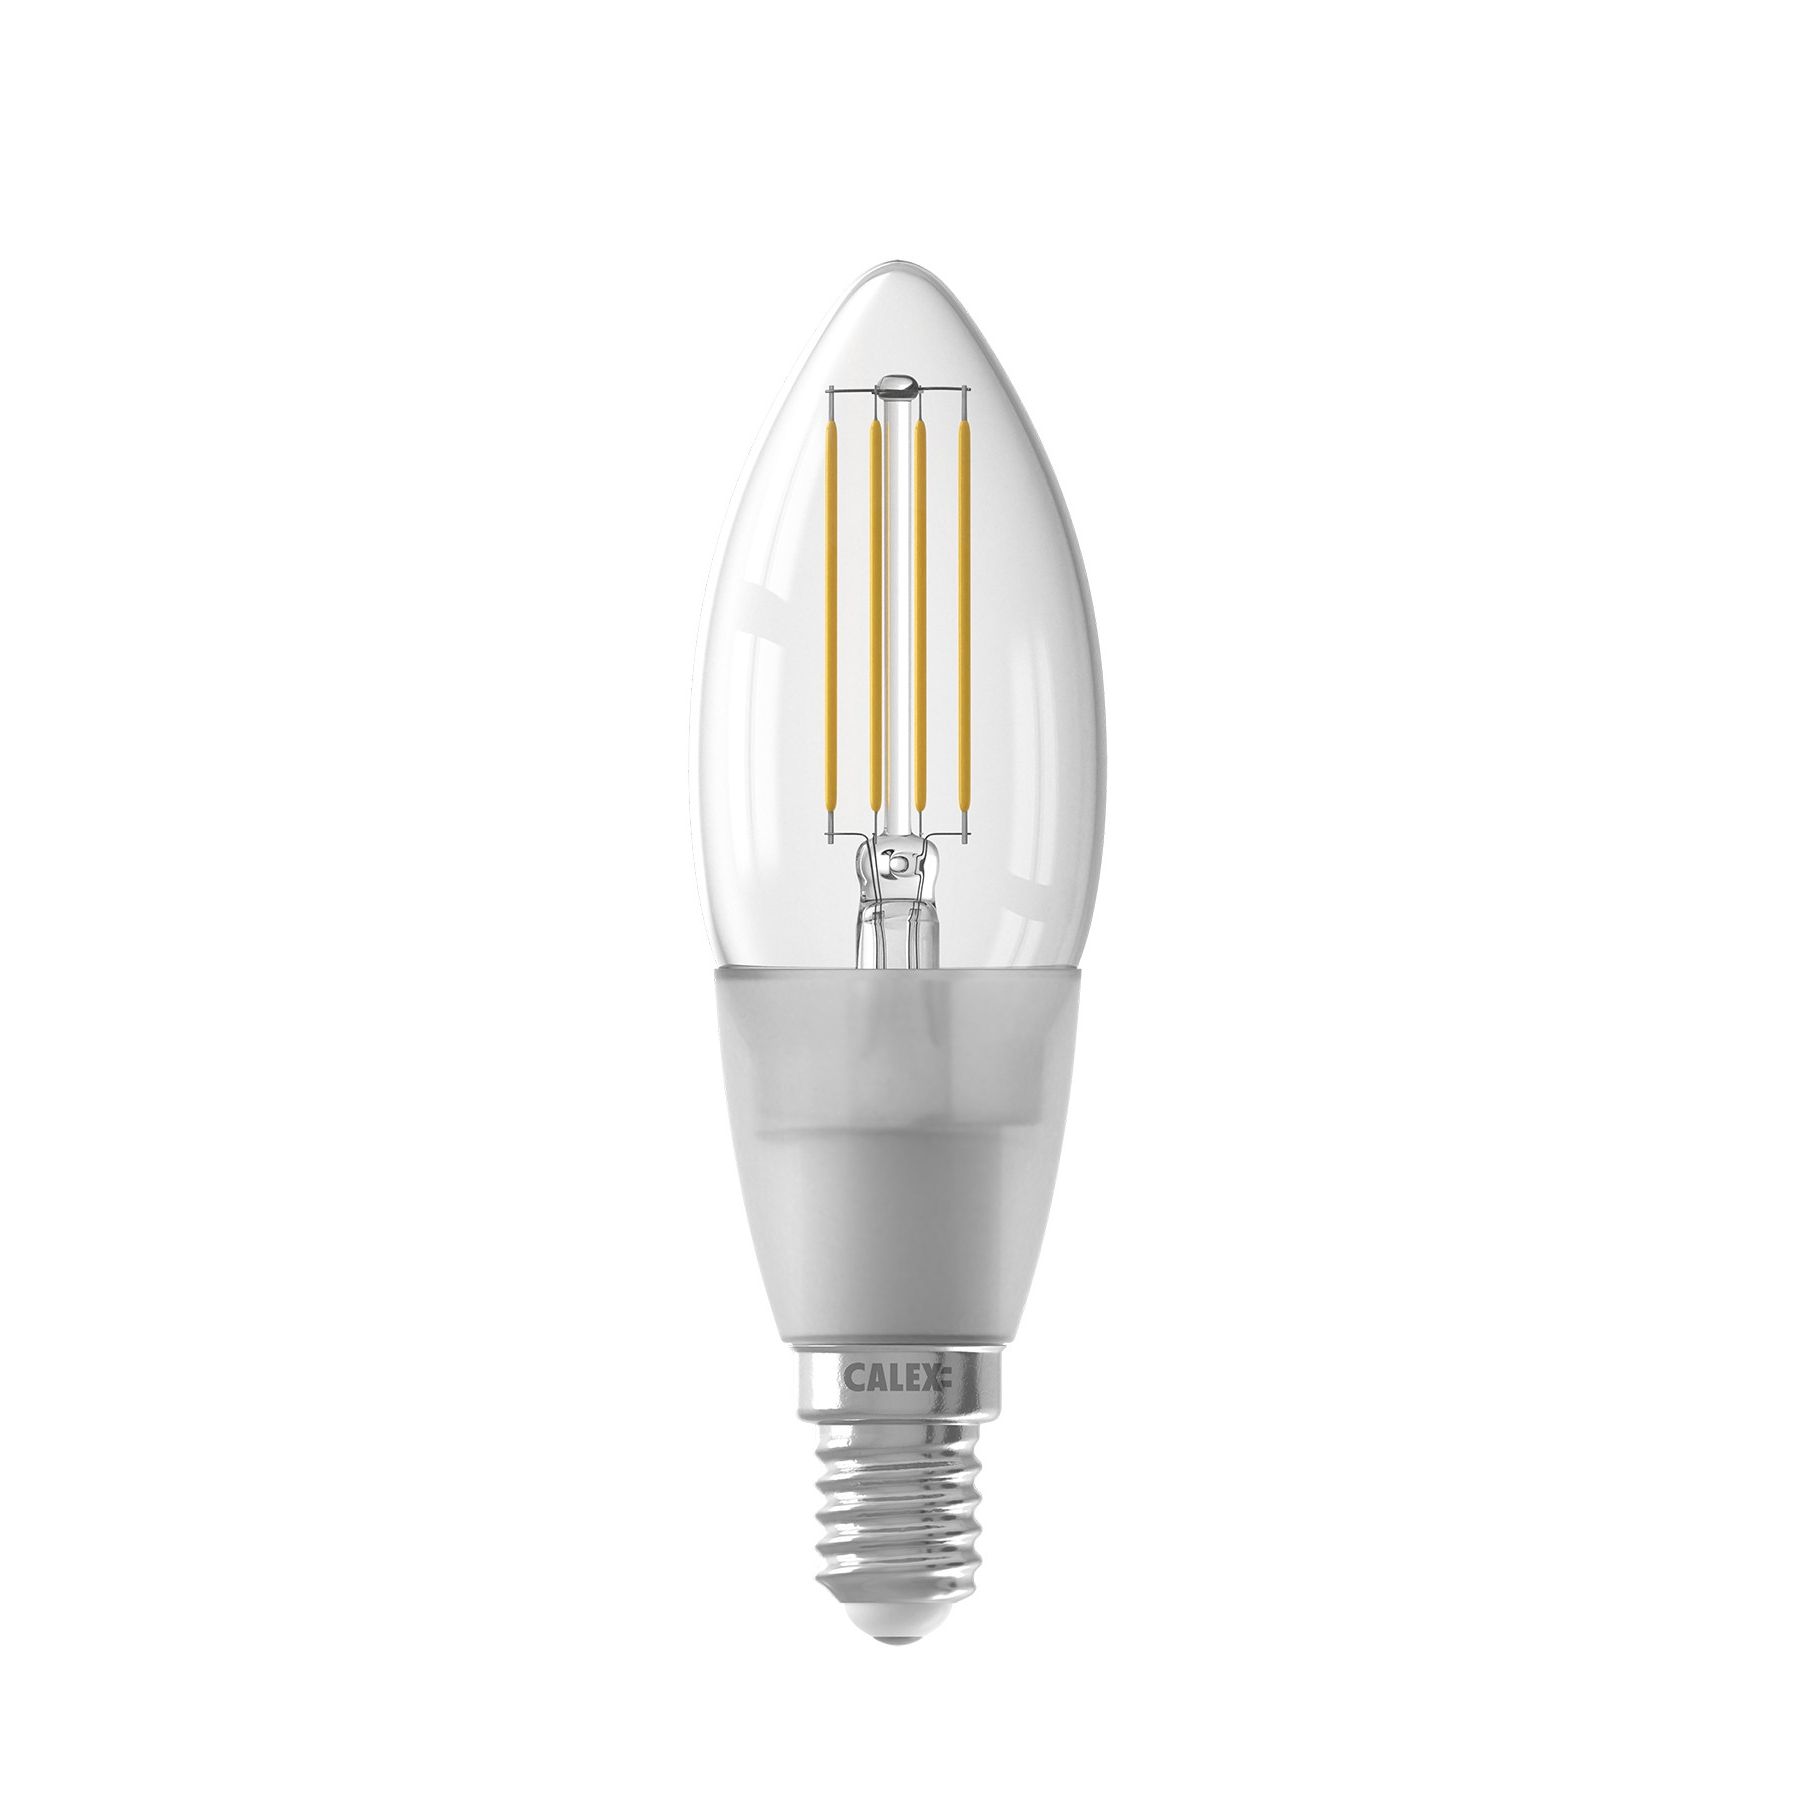 Bourgondië andere Koningin Calex Smart LED lamp - Ø 3,5 x 11,2 cm - E14 - 4,5W - dimfunctie via app -  1800 tot 3000K - white ambiance | Lichtkoning